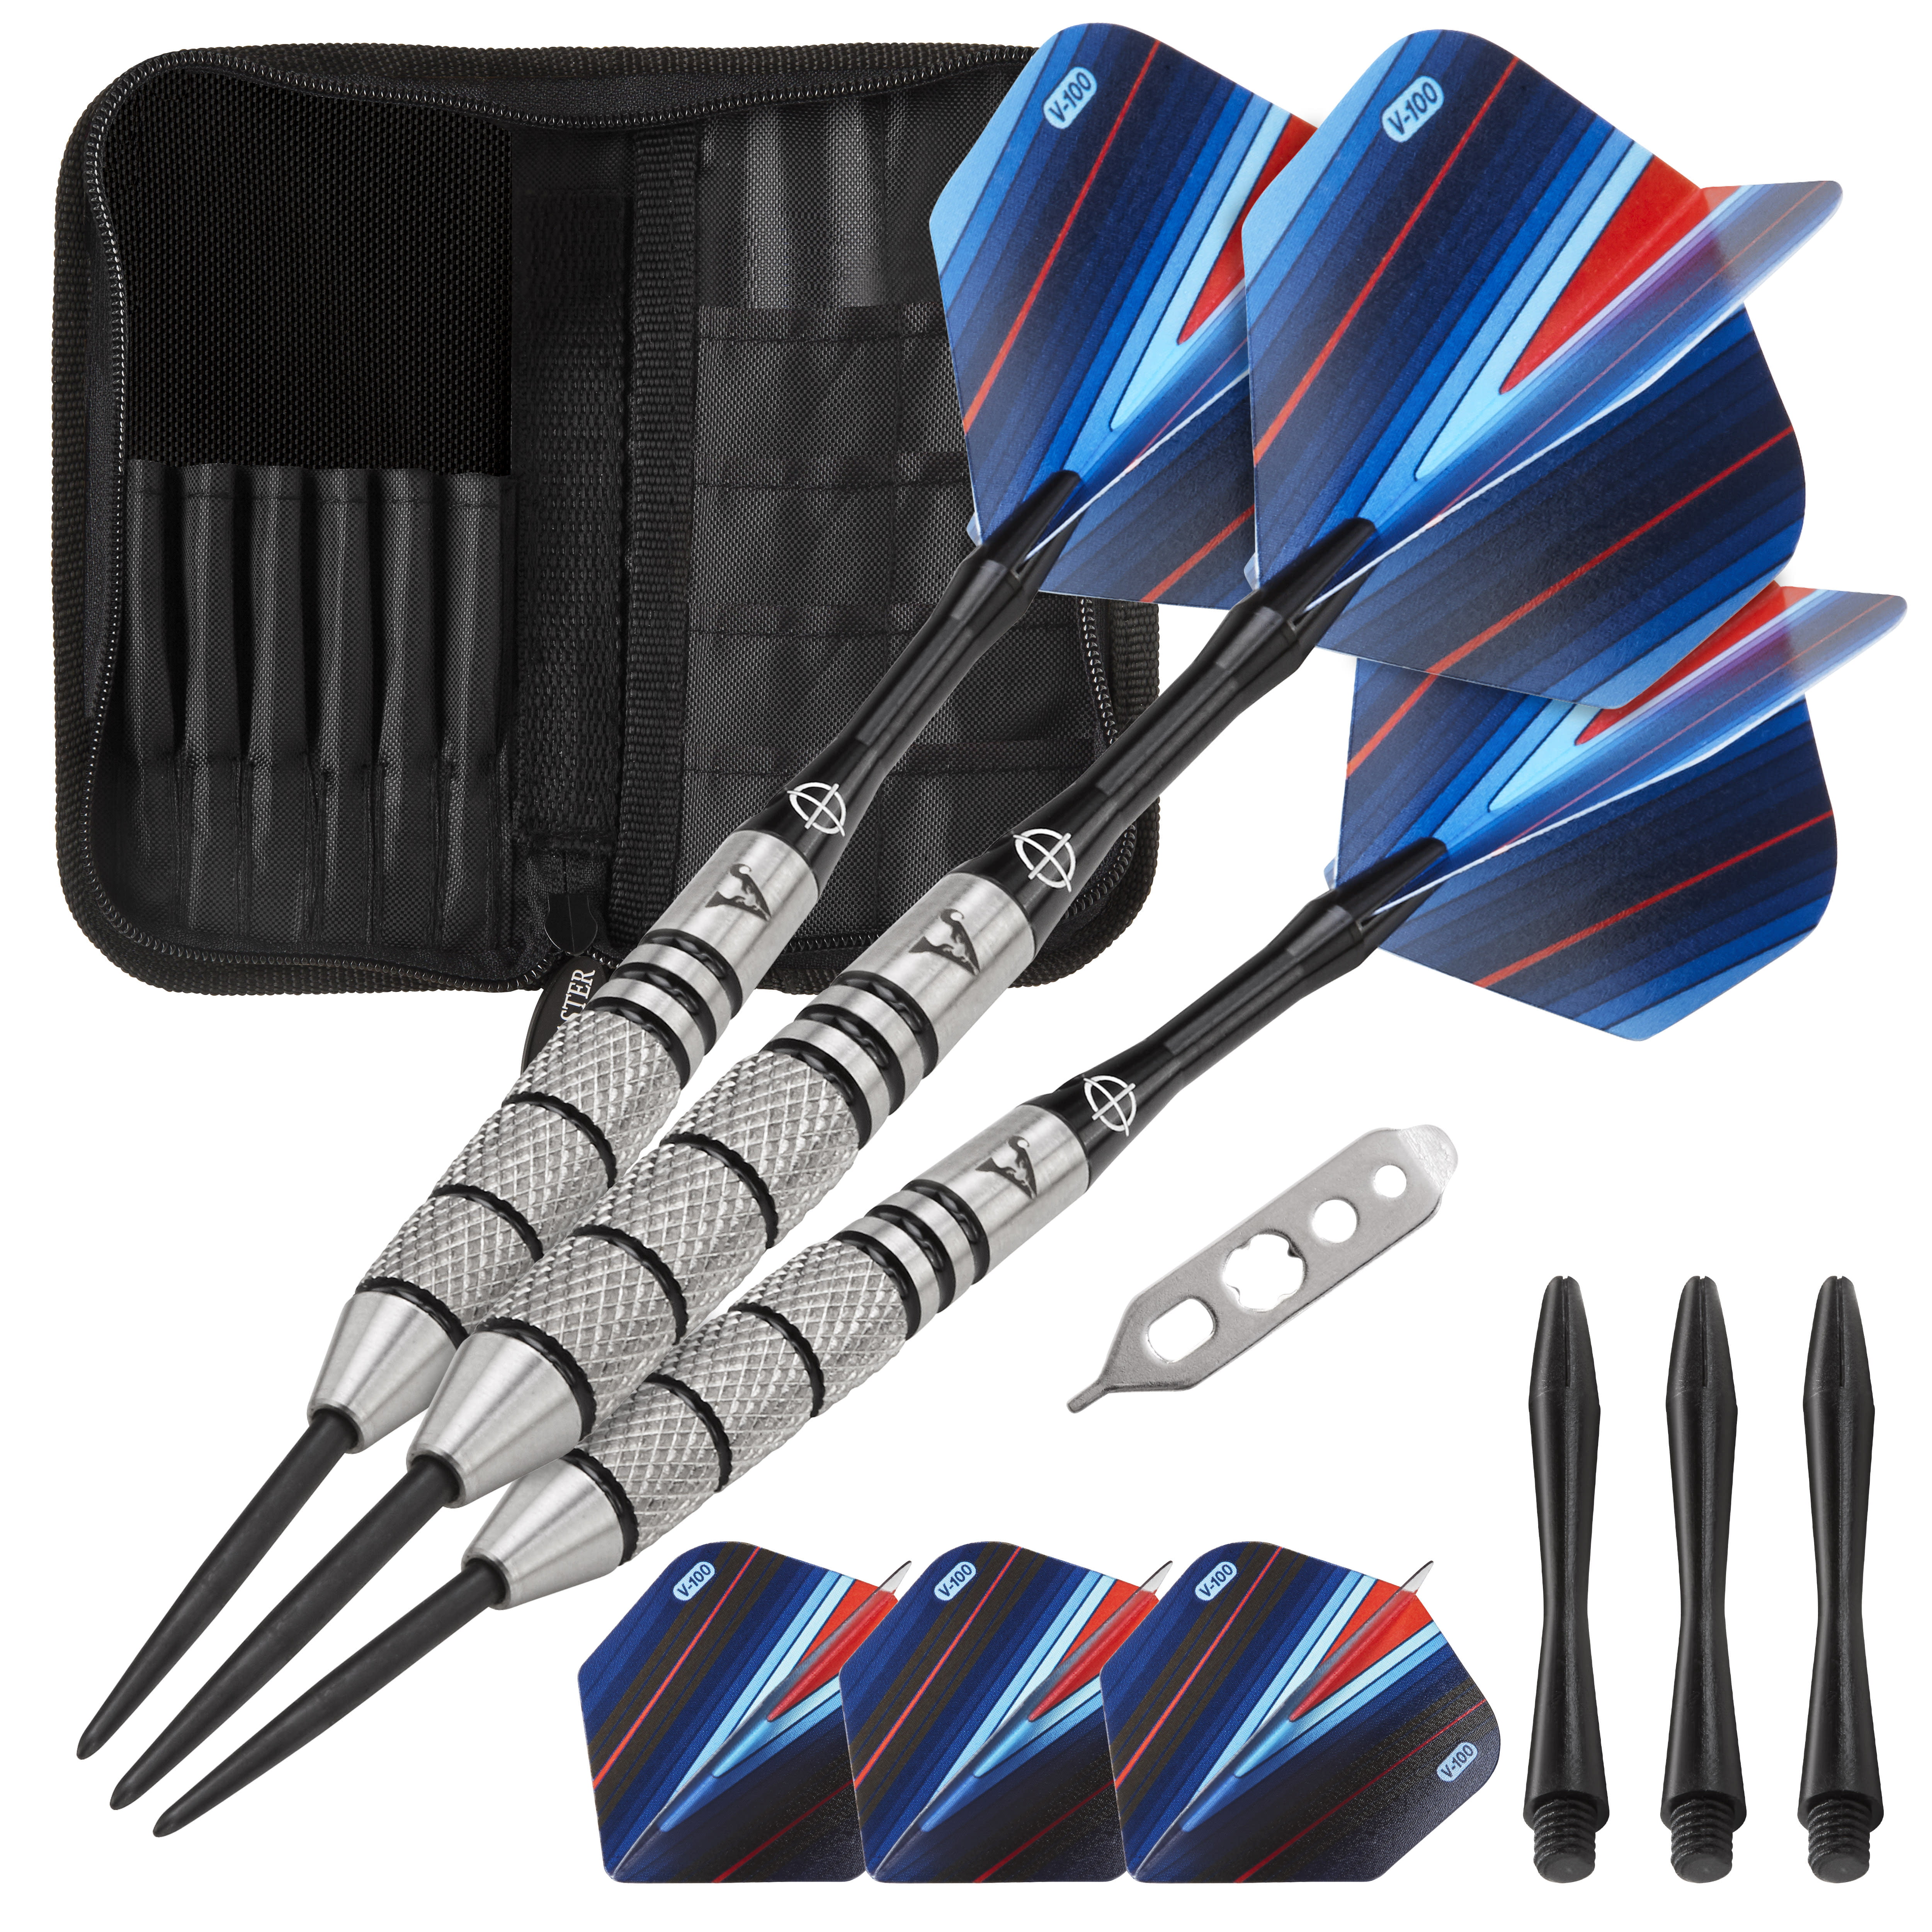 Casemaster Black Wallet Nylon Dart Case Holds 1 set of darts flights shafts tips 